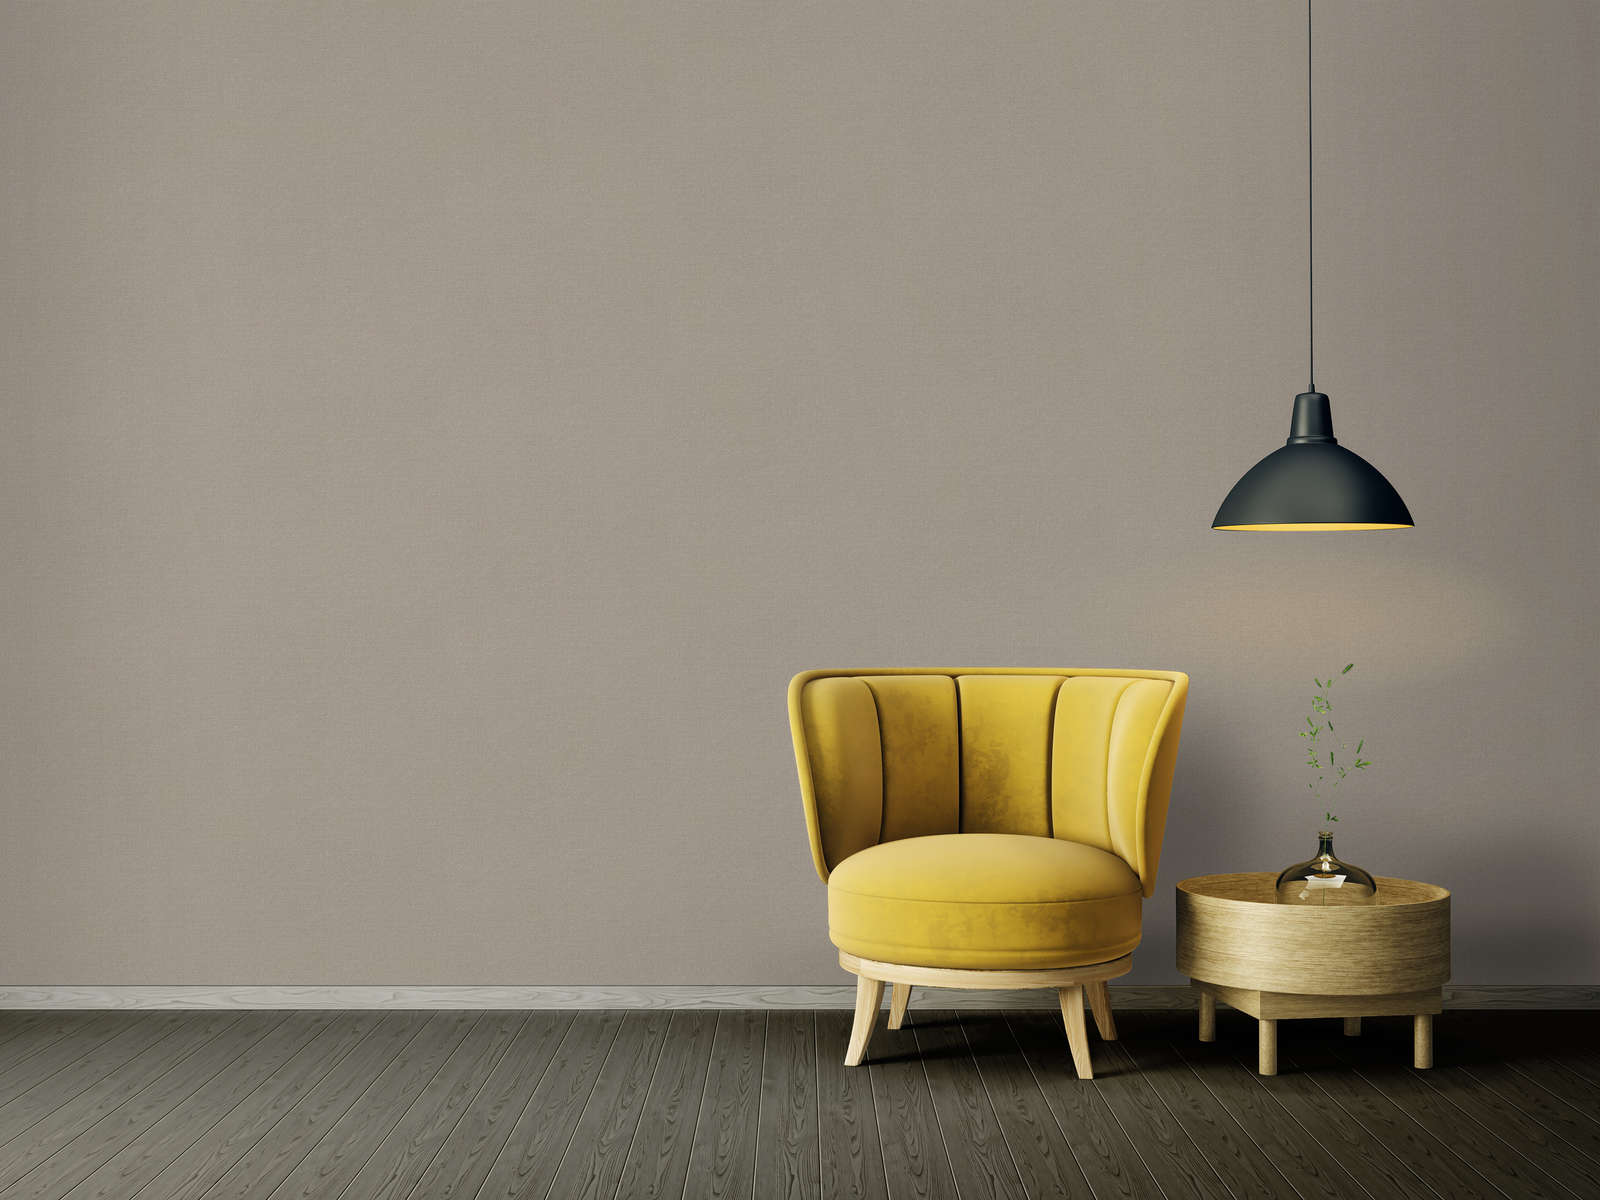             Linen look wallpaper with textured surface, plain - beige, grey
        